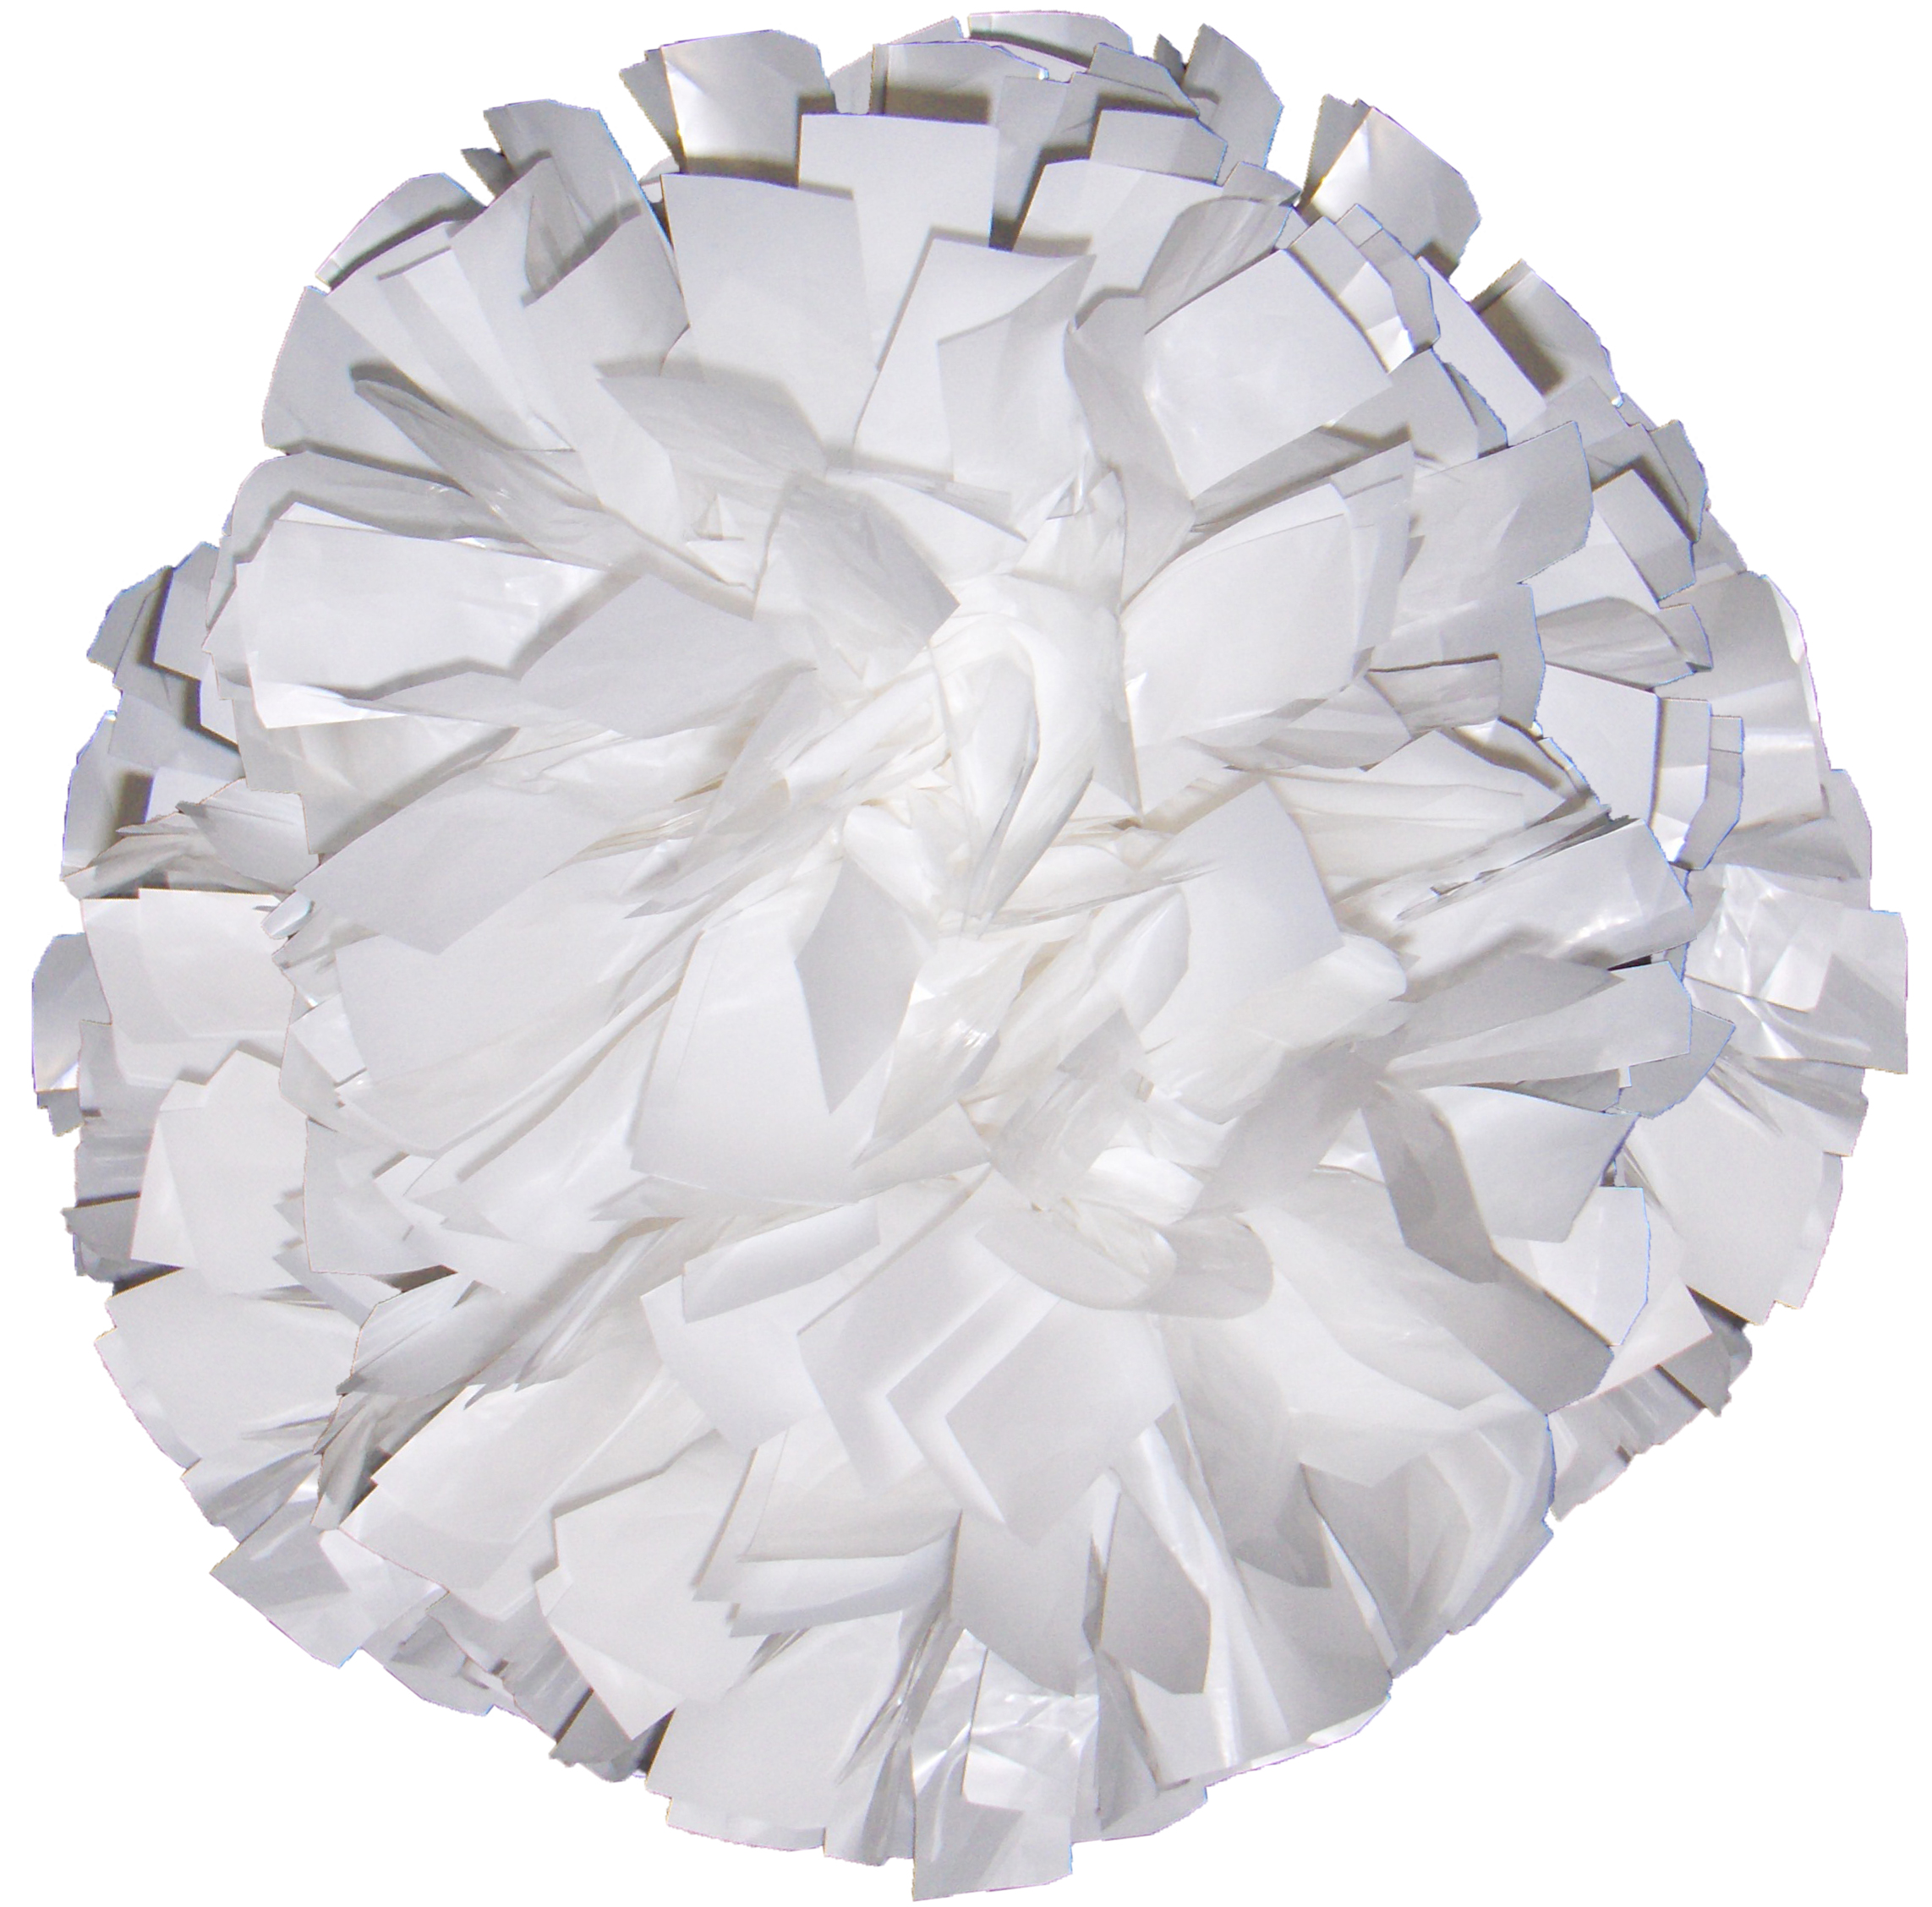 Metallic Pom Colors - White "Pearl"